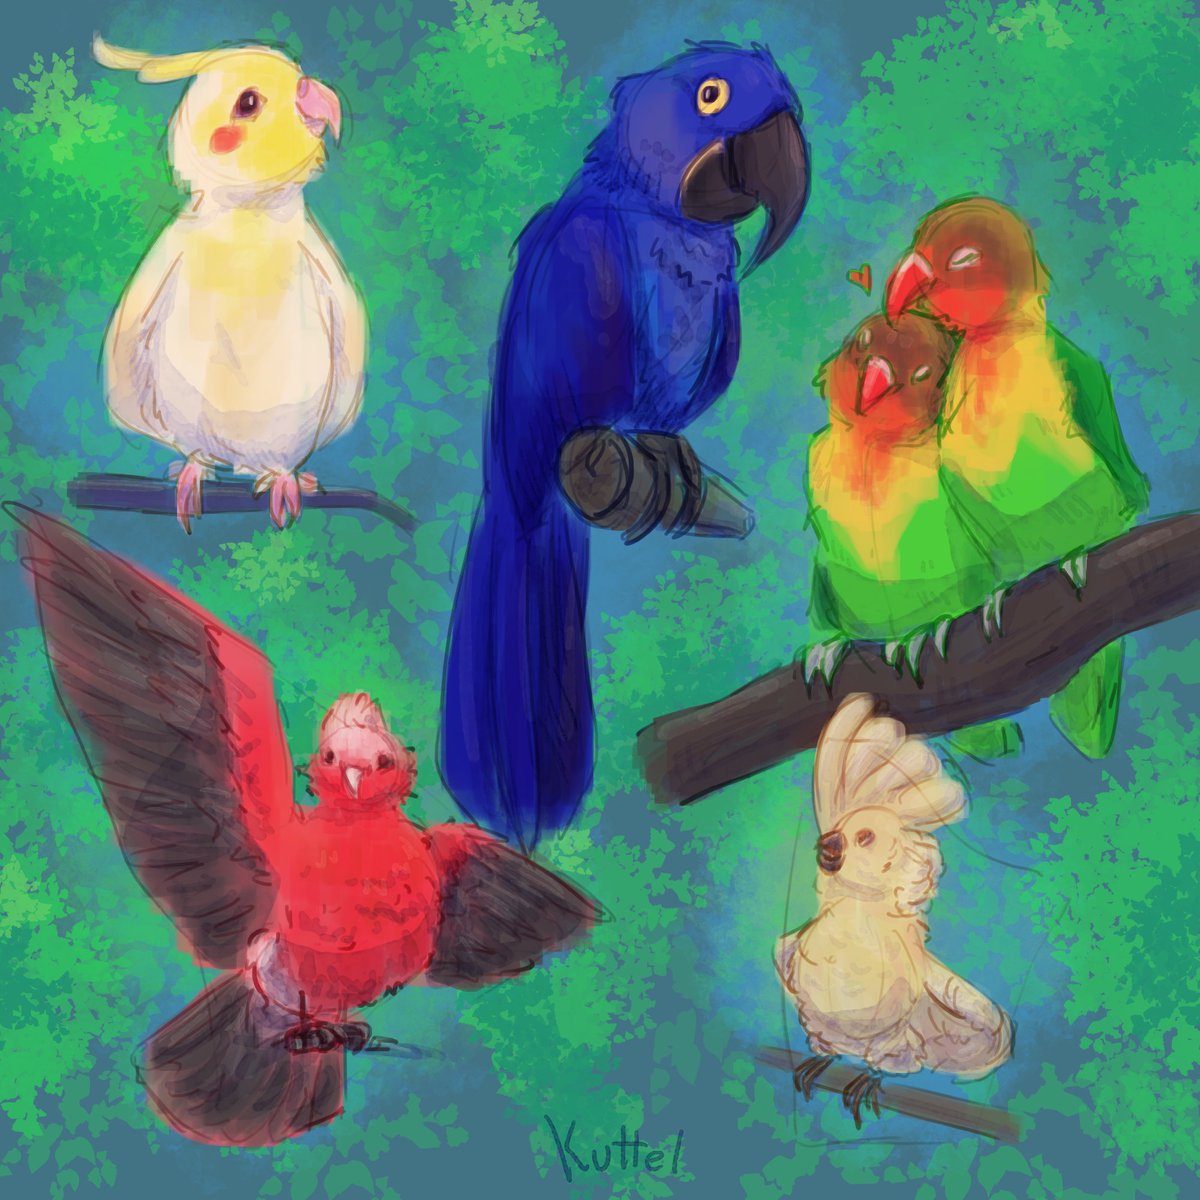 I really love birds, every time I'm depressed, drawing parrots helps me :)
#parrot #bird #parrotart #birdart #art #digitalart #sketch